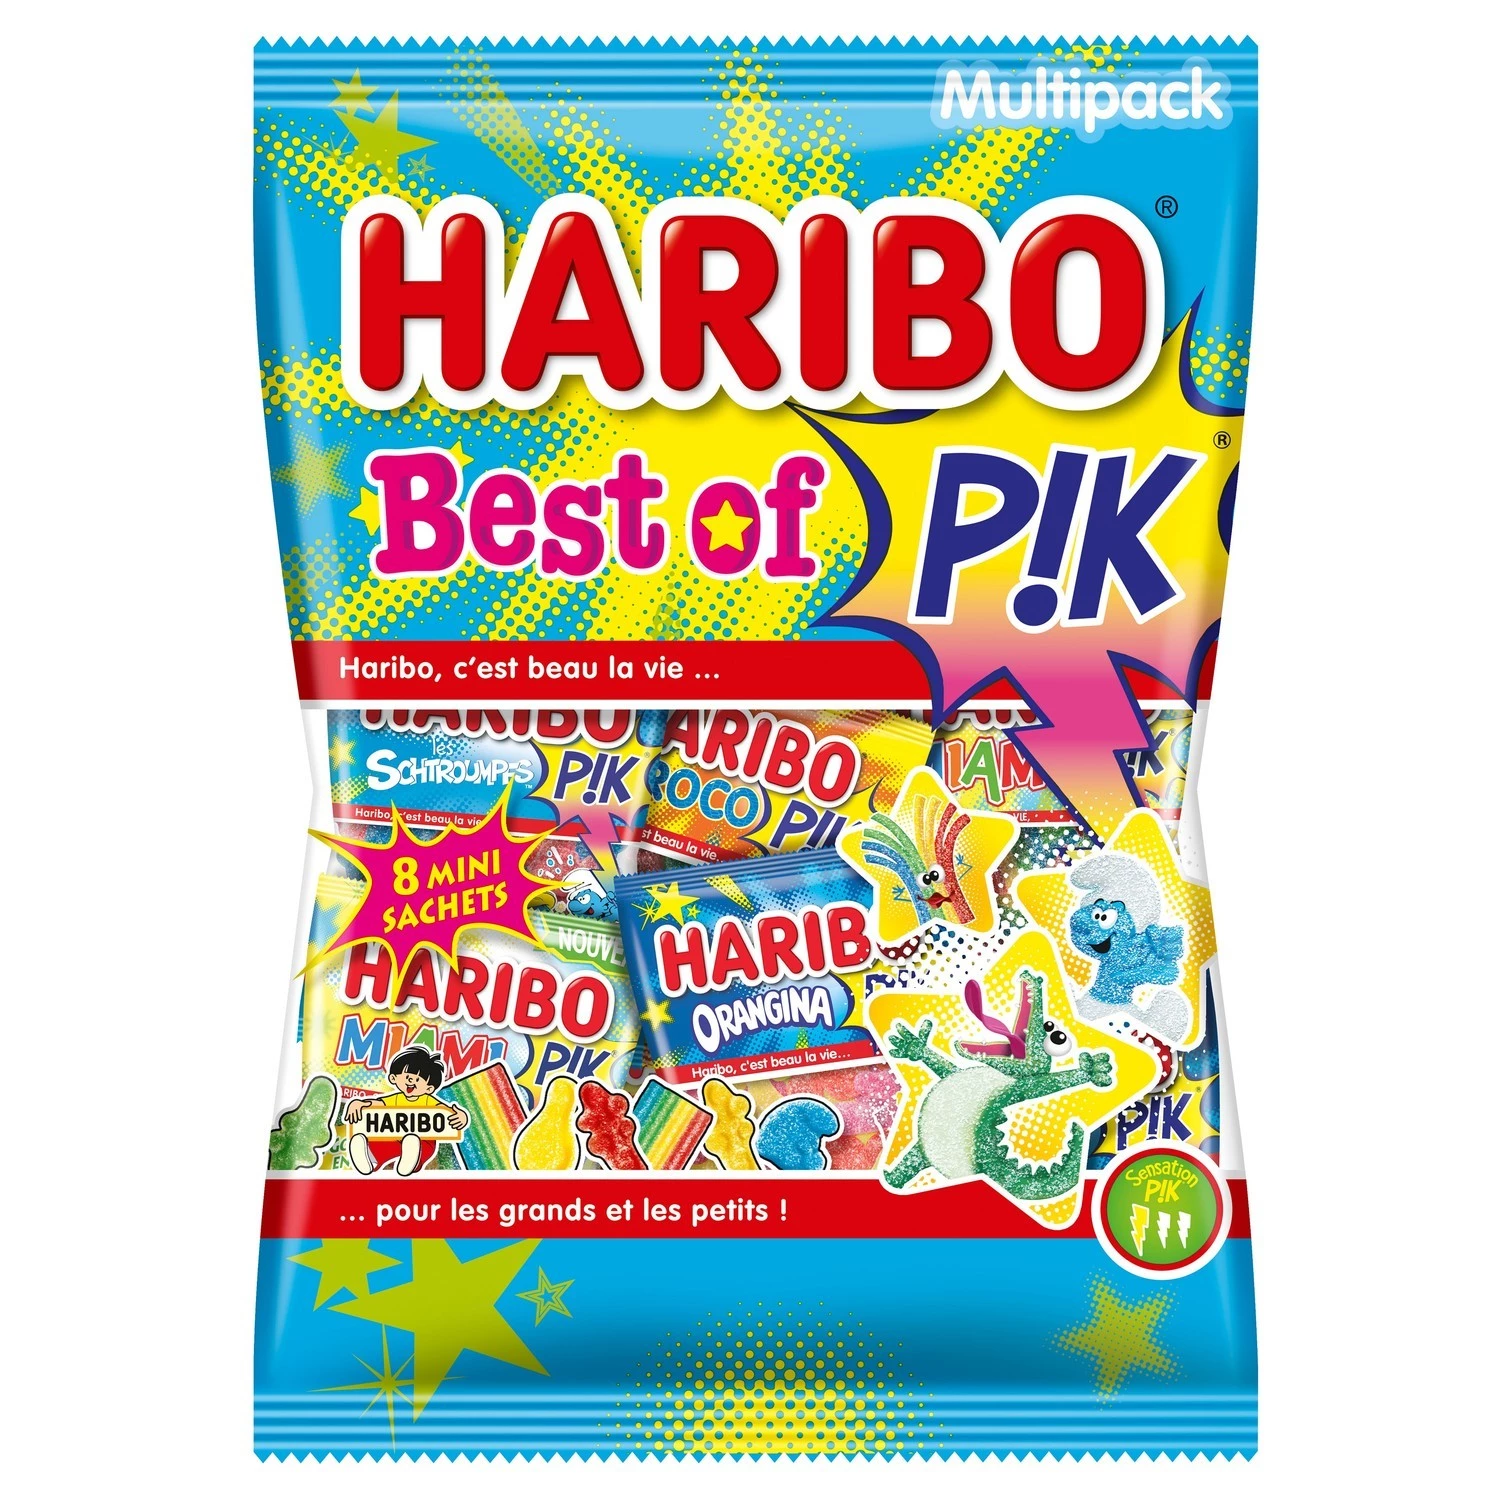 Bonbons Play & Pik Best Of; 360g - HARIBO